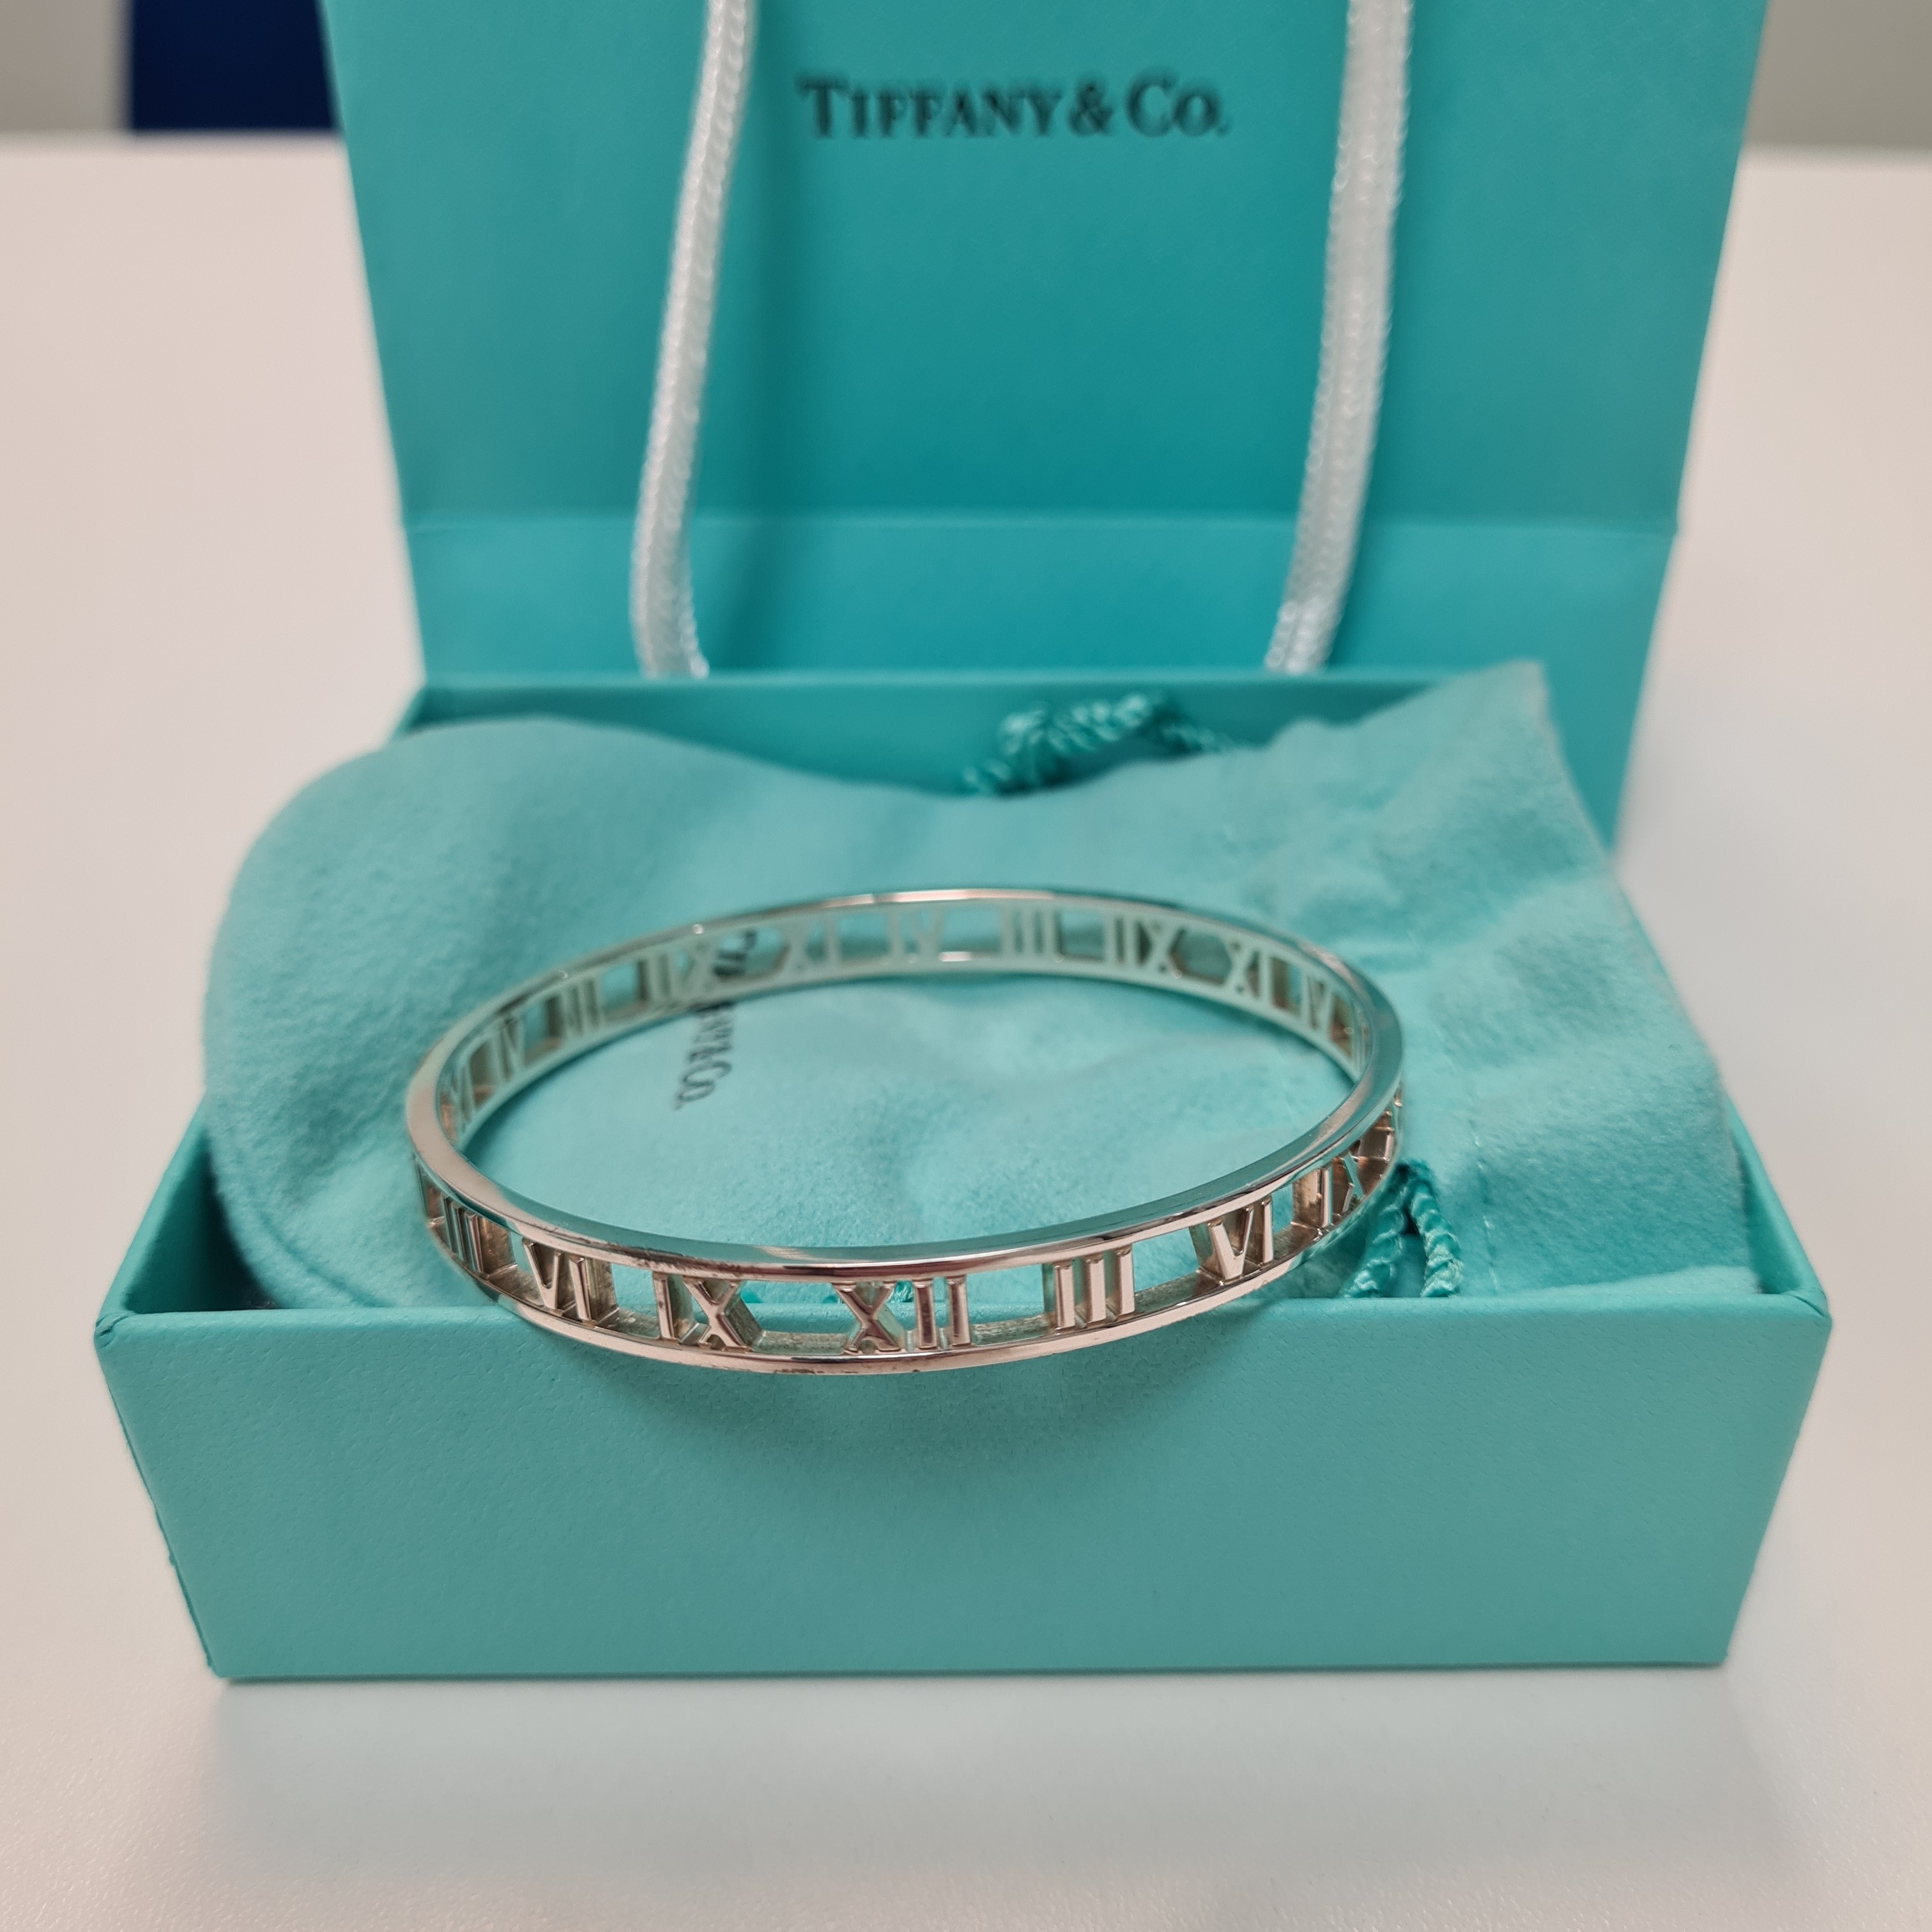 Tiffany Atlas bangle bracelet with Roman Numerals